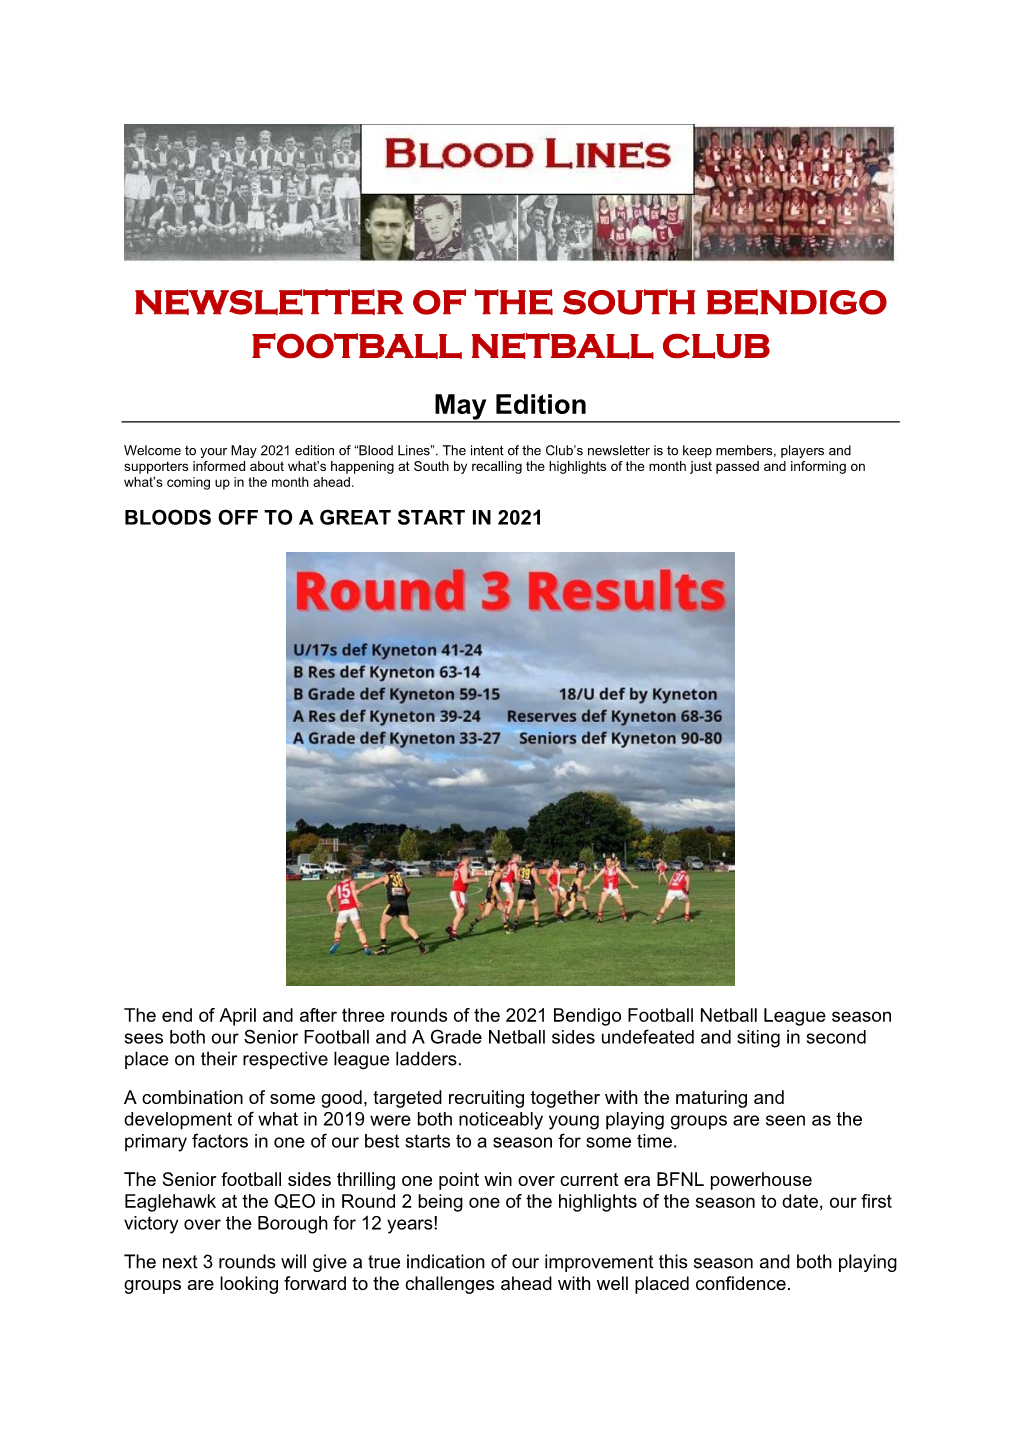 Newsletter of the South Bendigo Football Netball Club